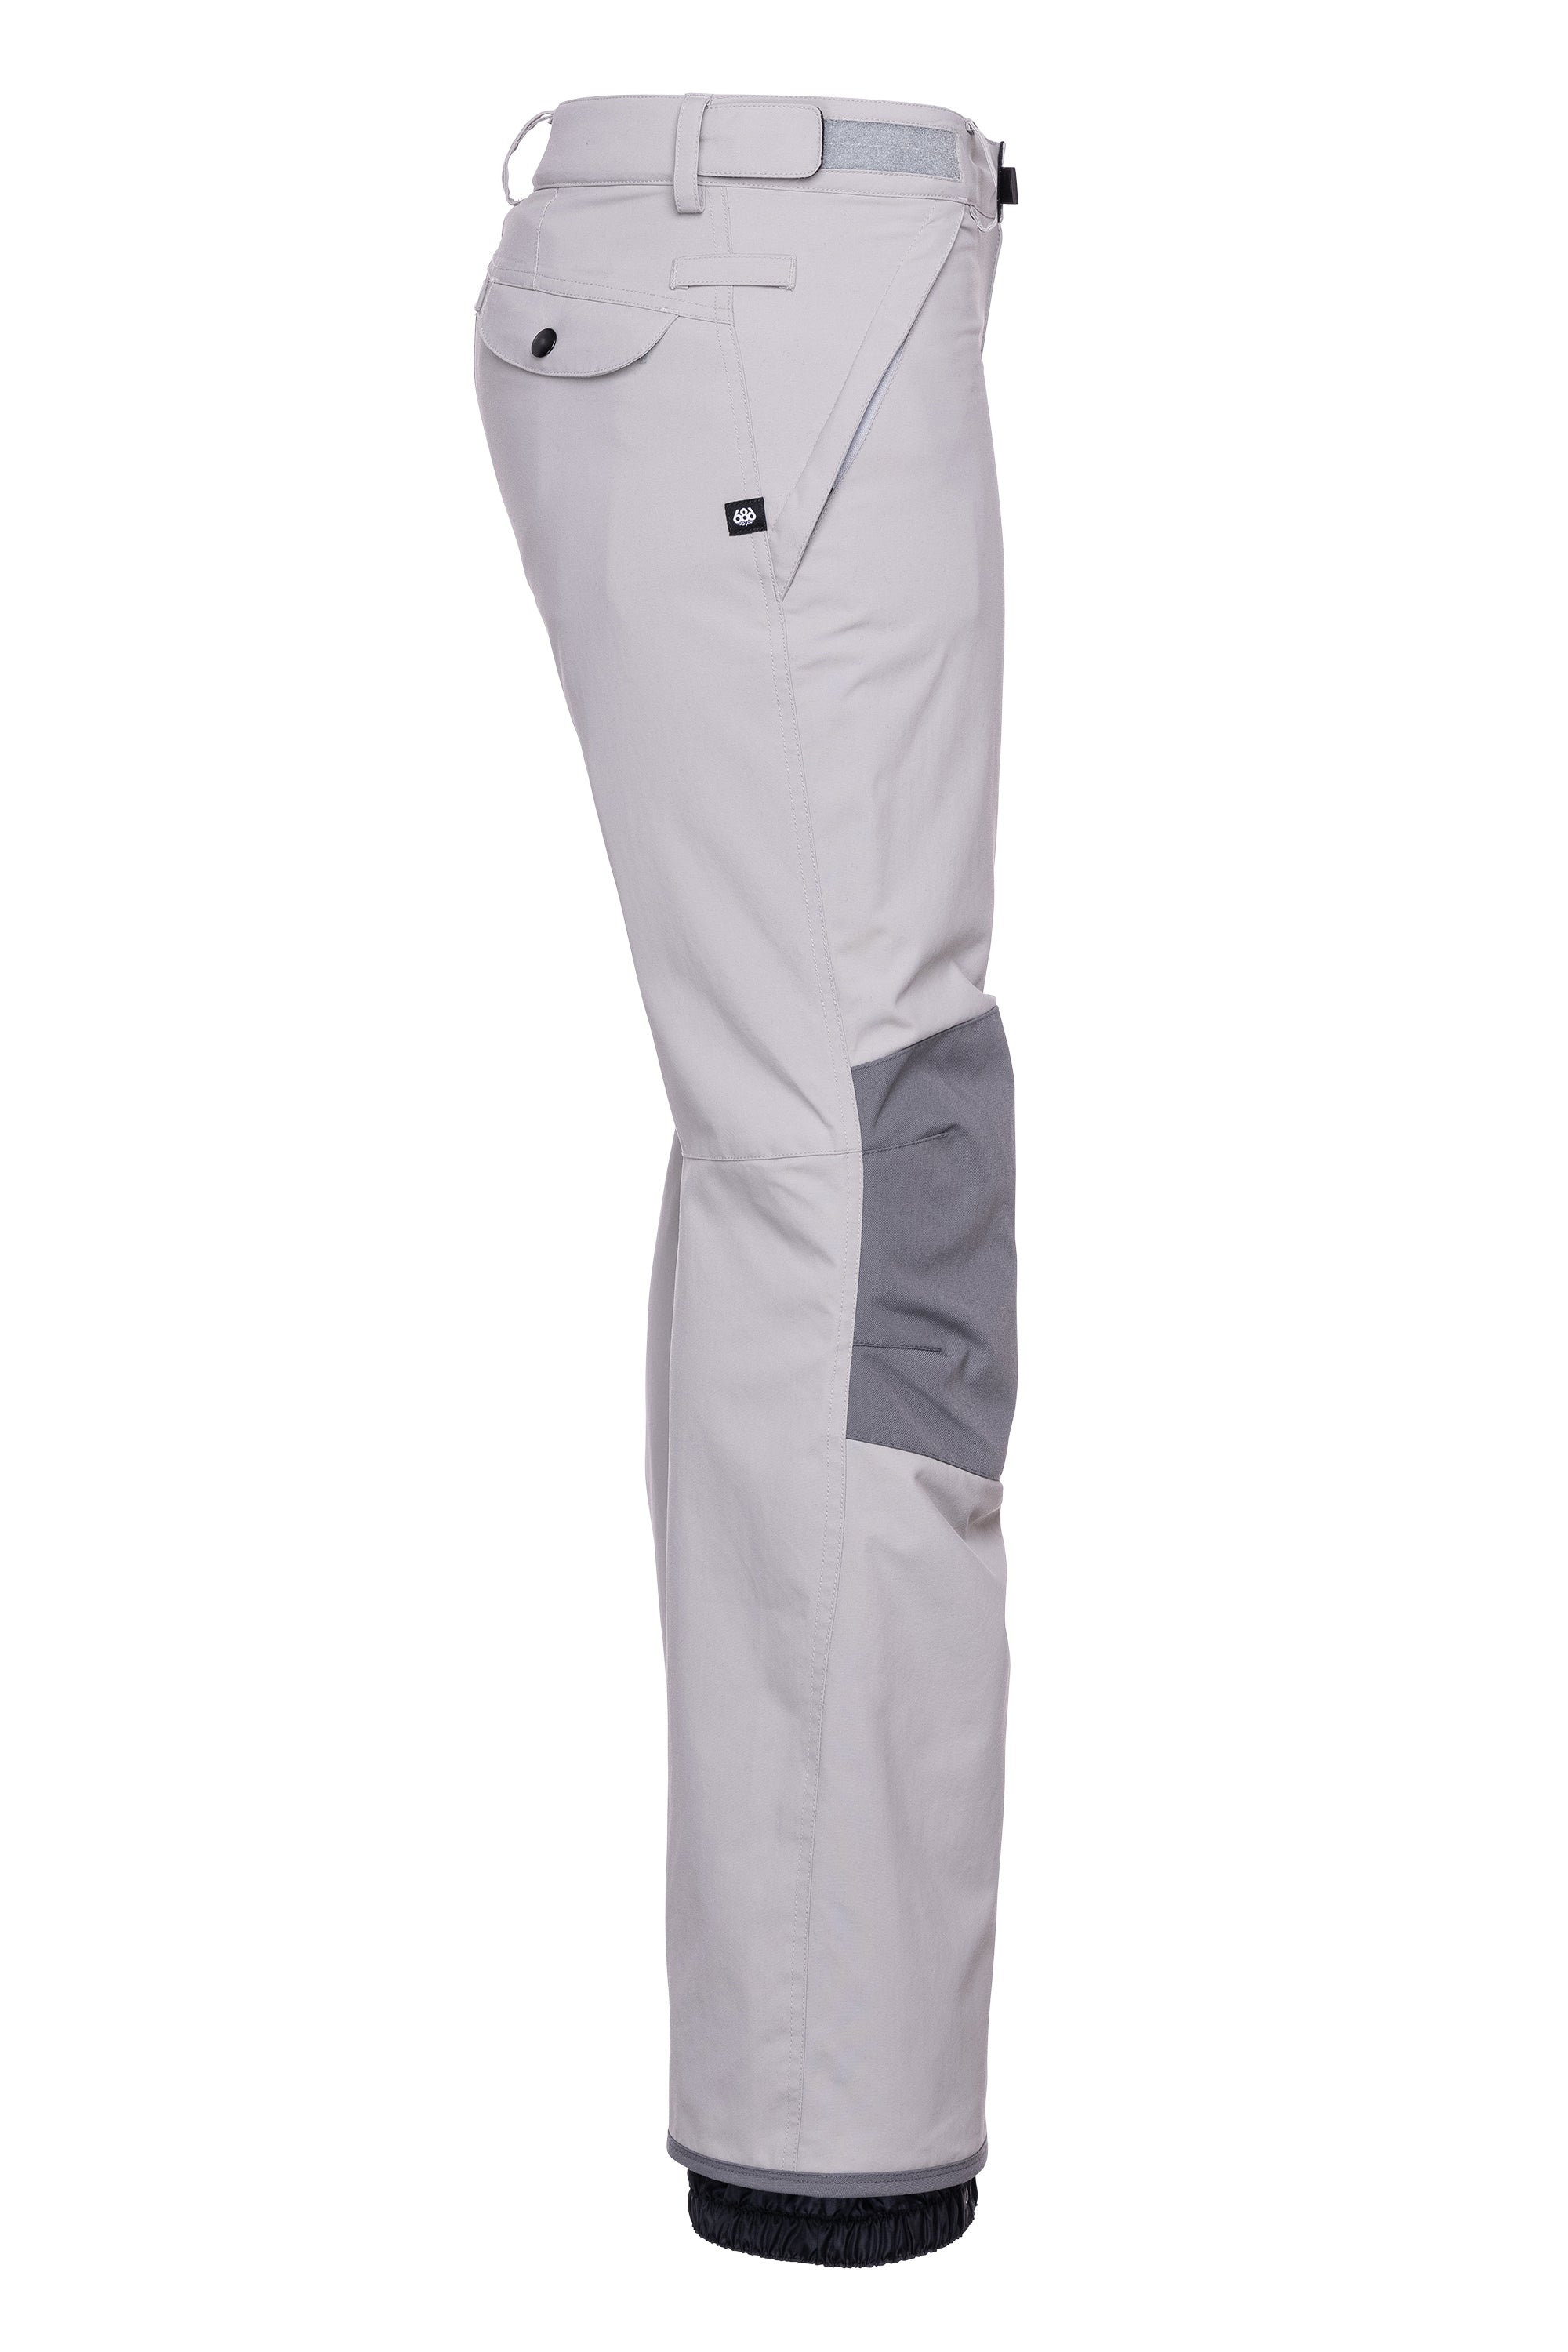 686 Women's Progression Padded Snow Pants - 88 Gear